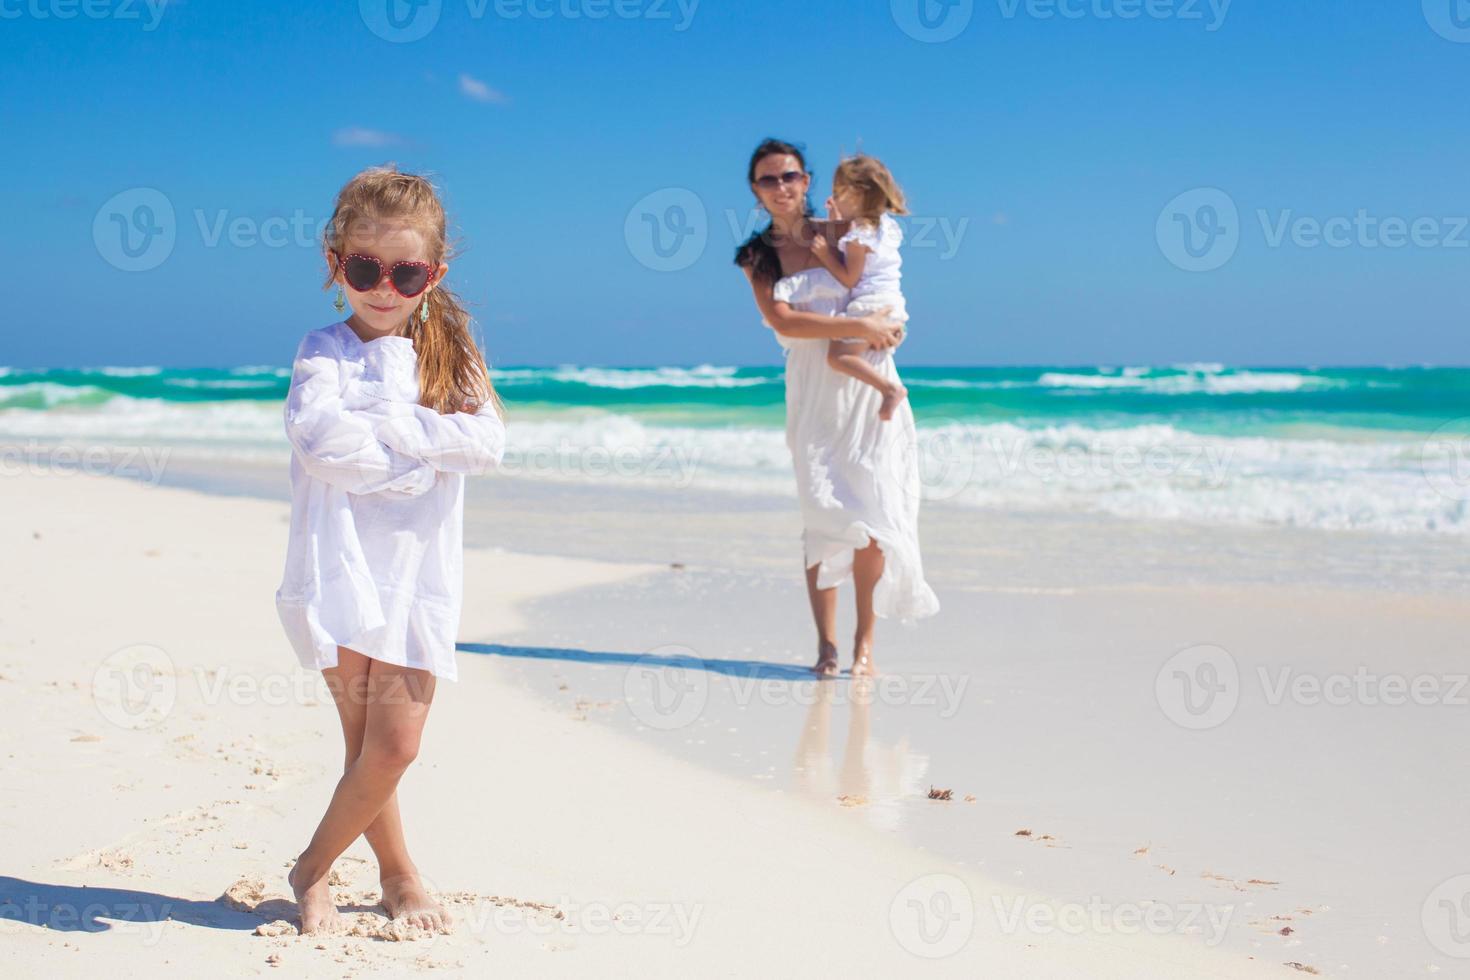 Family vacation on the beach photo